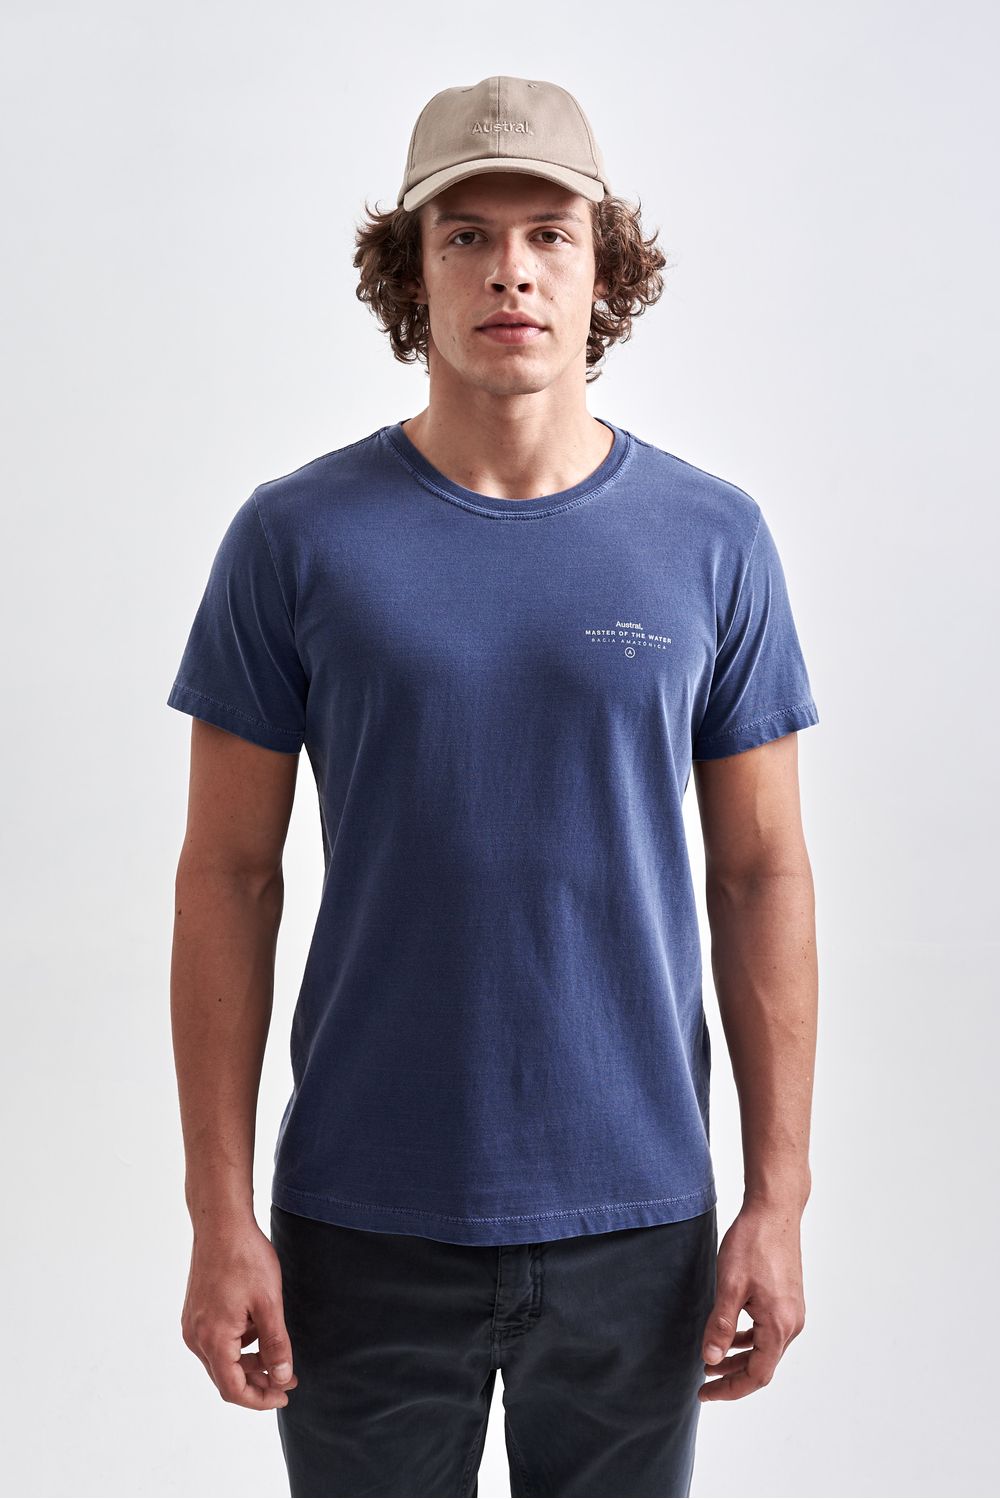 AUSTRAL - Camiseta Jundia Stone Azul Escuro